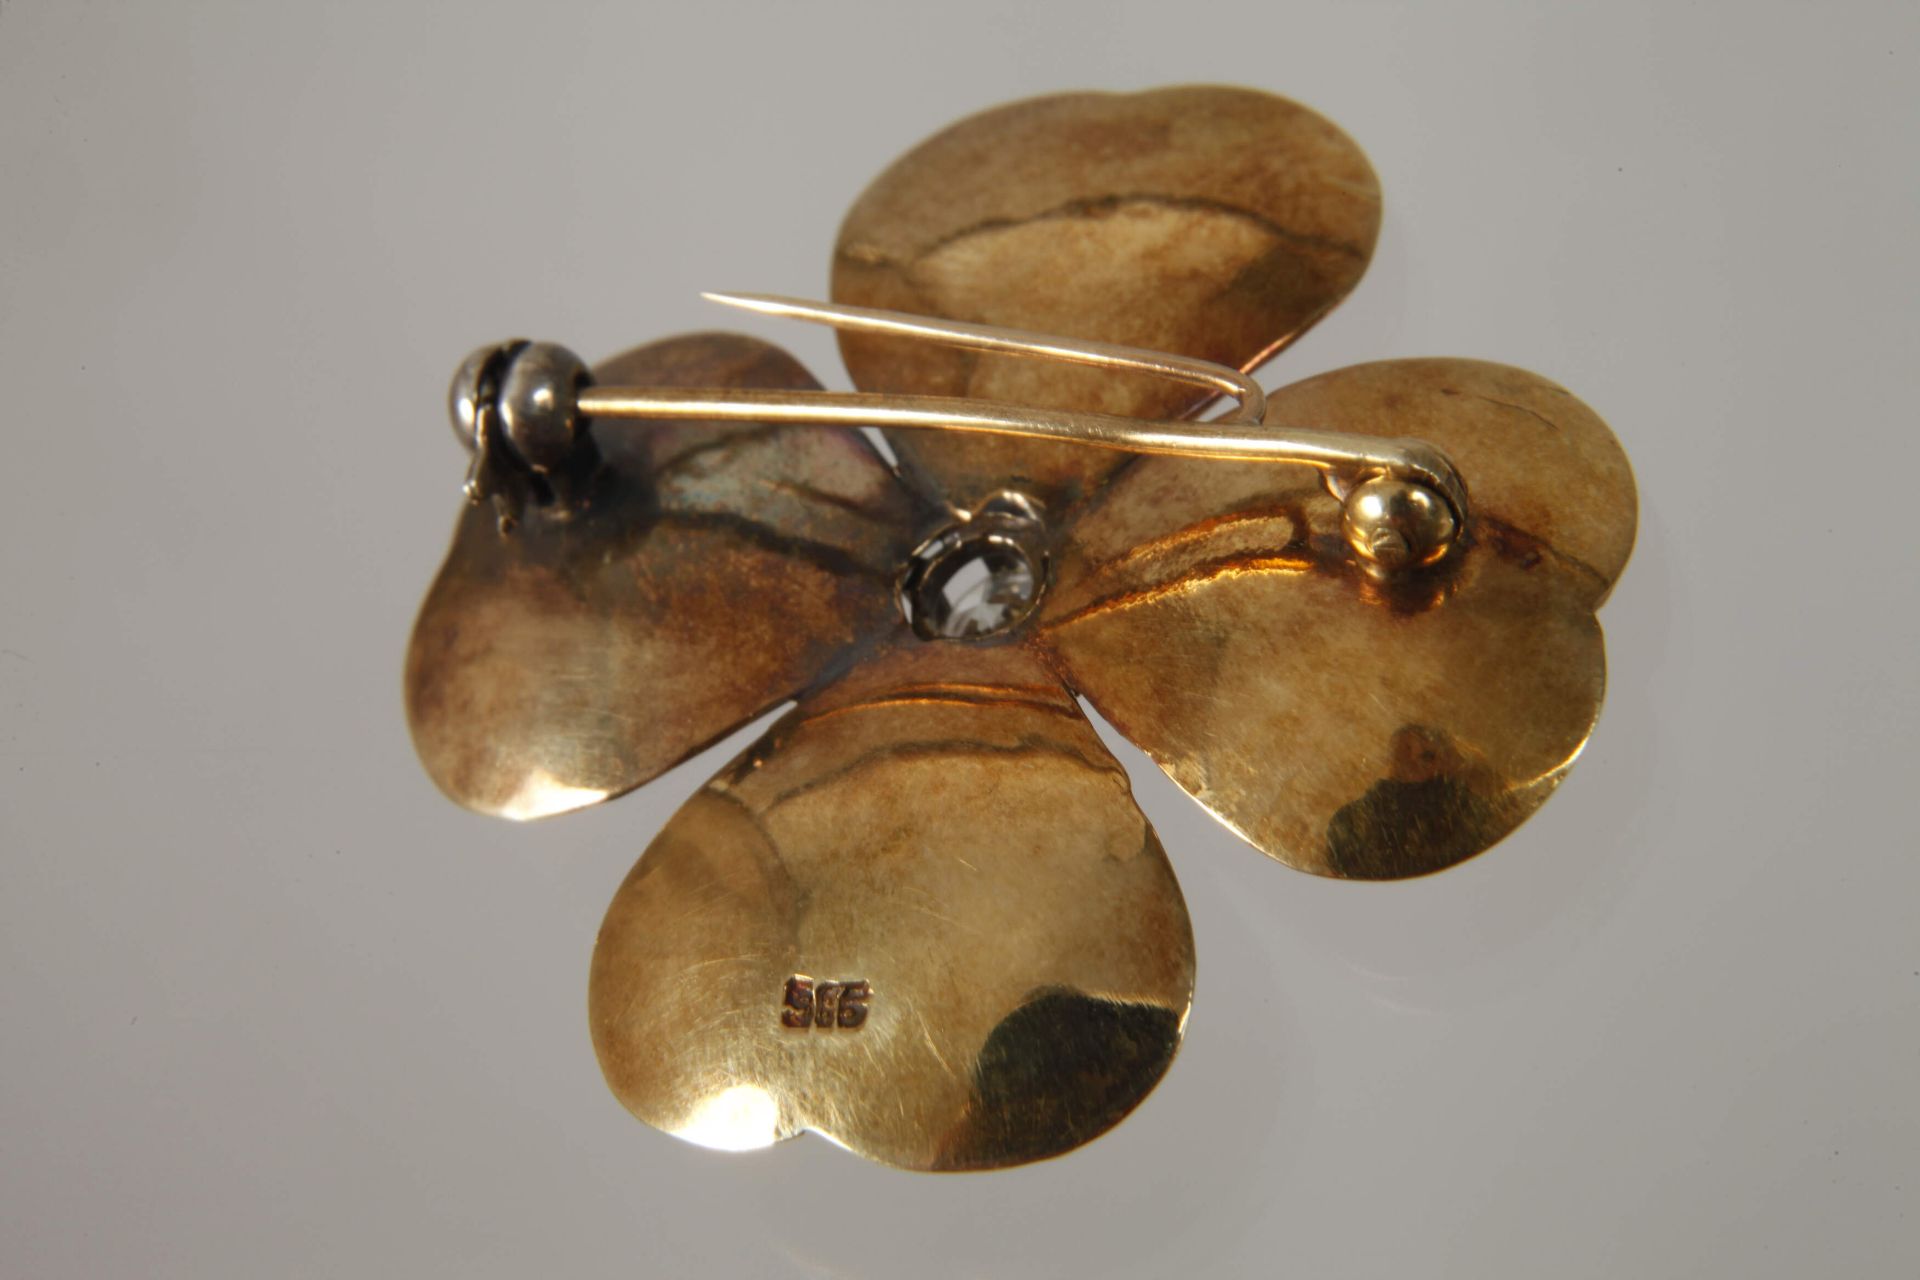 Cloverleaf brooch with brilliant-cut diamond - Image 2 of 2